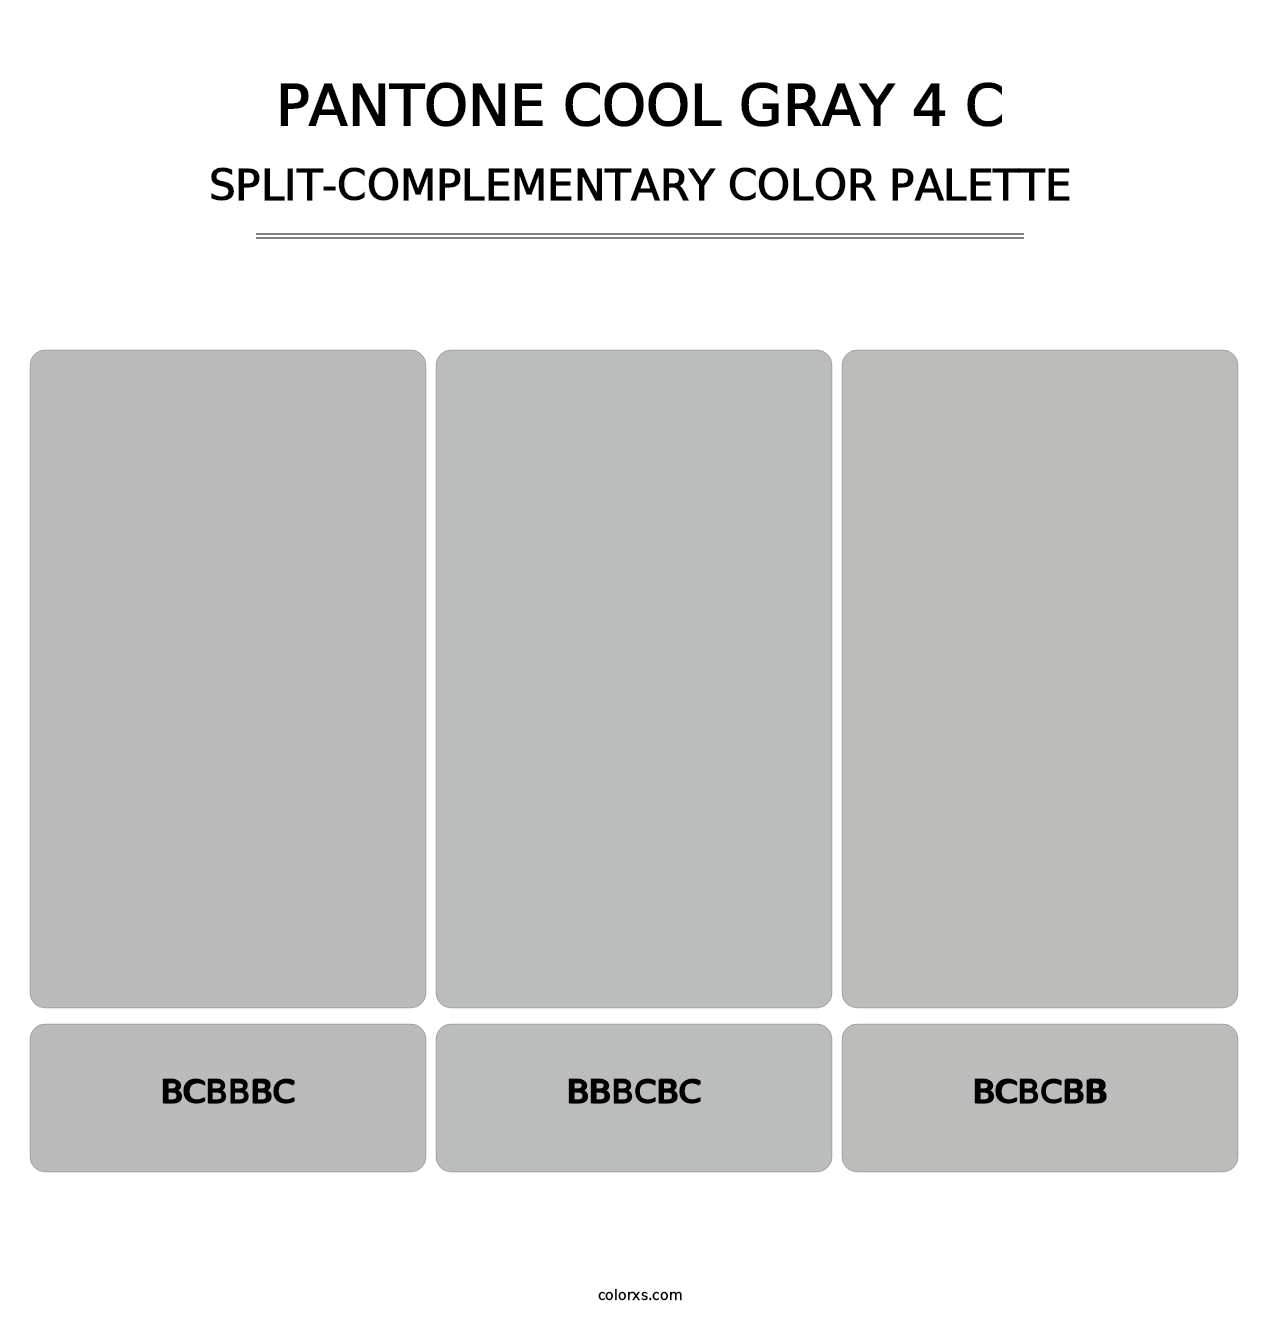 PANTONE Cool Gray 4 C - Split-Complementary Color Palette